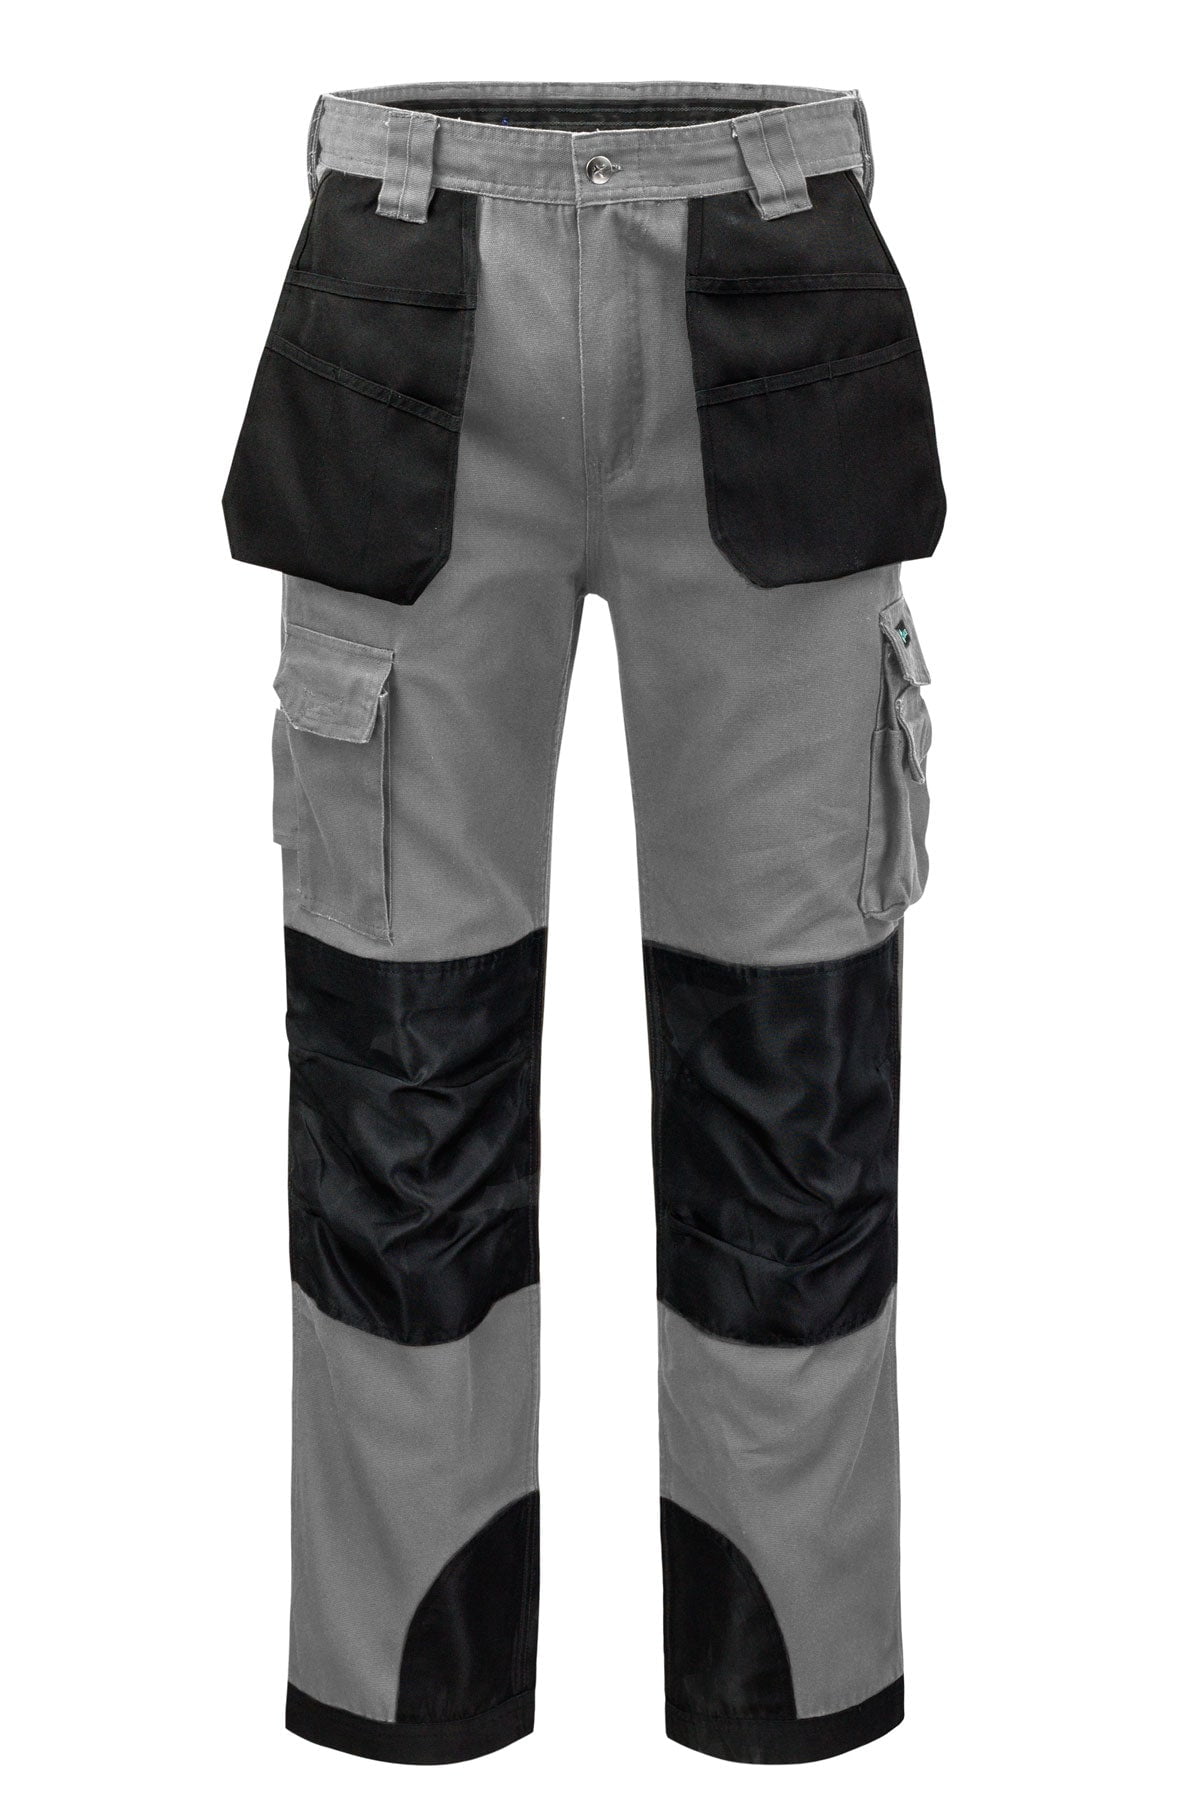 Black Grey Khaki Heavy duty Combat Mens Cargo Trousers Work Pent knee pad pocket 